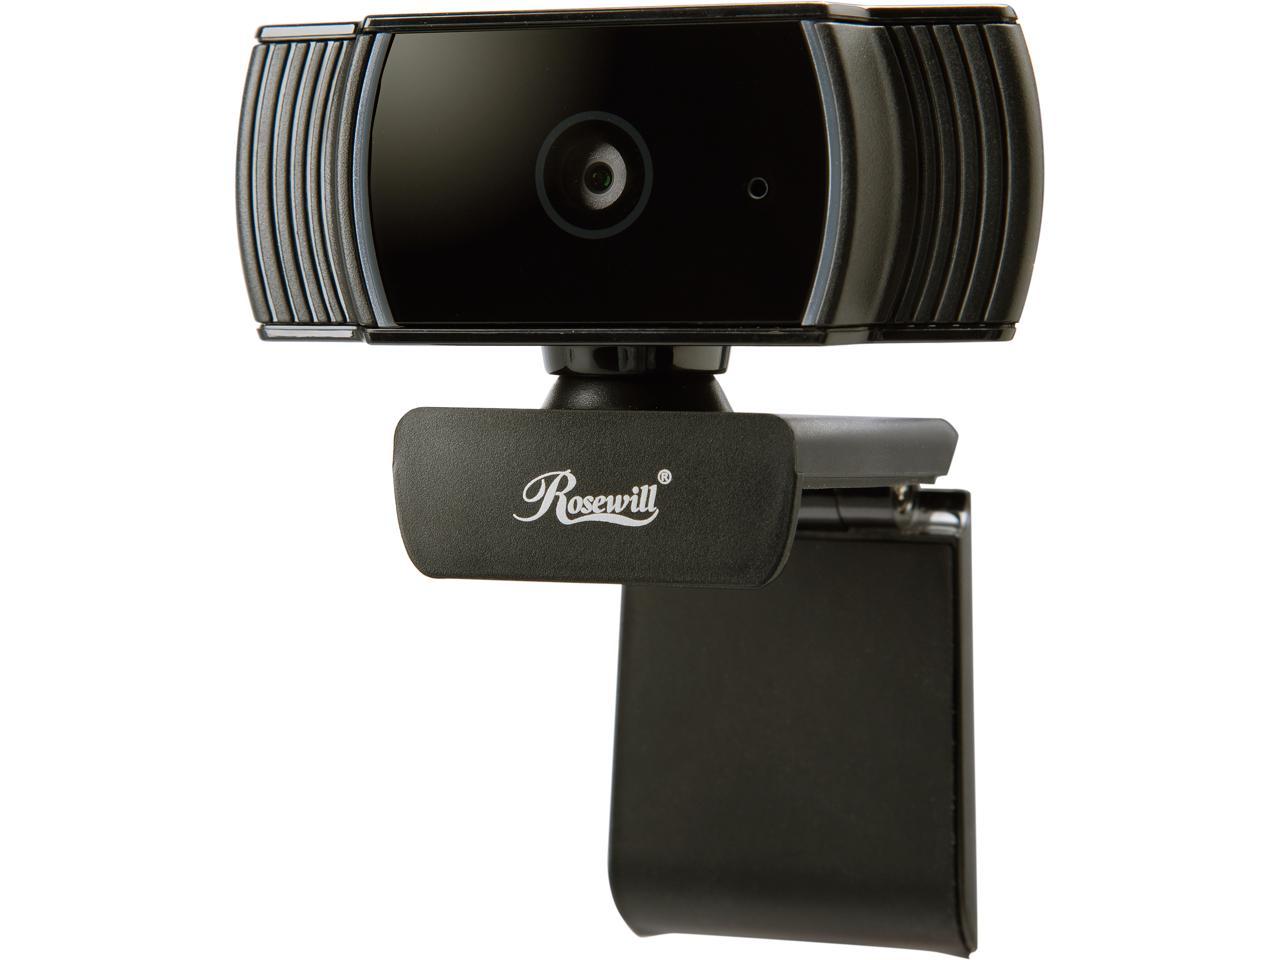 Rosewill 1080p HD Web Camera, Plug & Play Camera for Windows & Mac OS, 2M Pixels High Definition, Microphone, USB 2.0, RCAM-20001